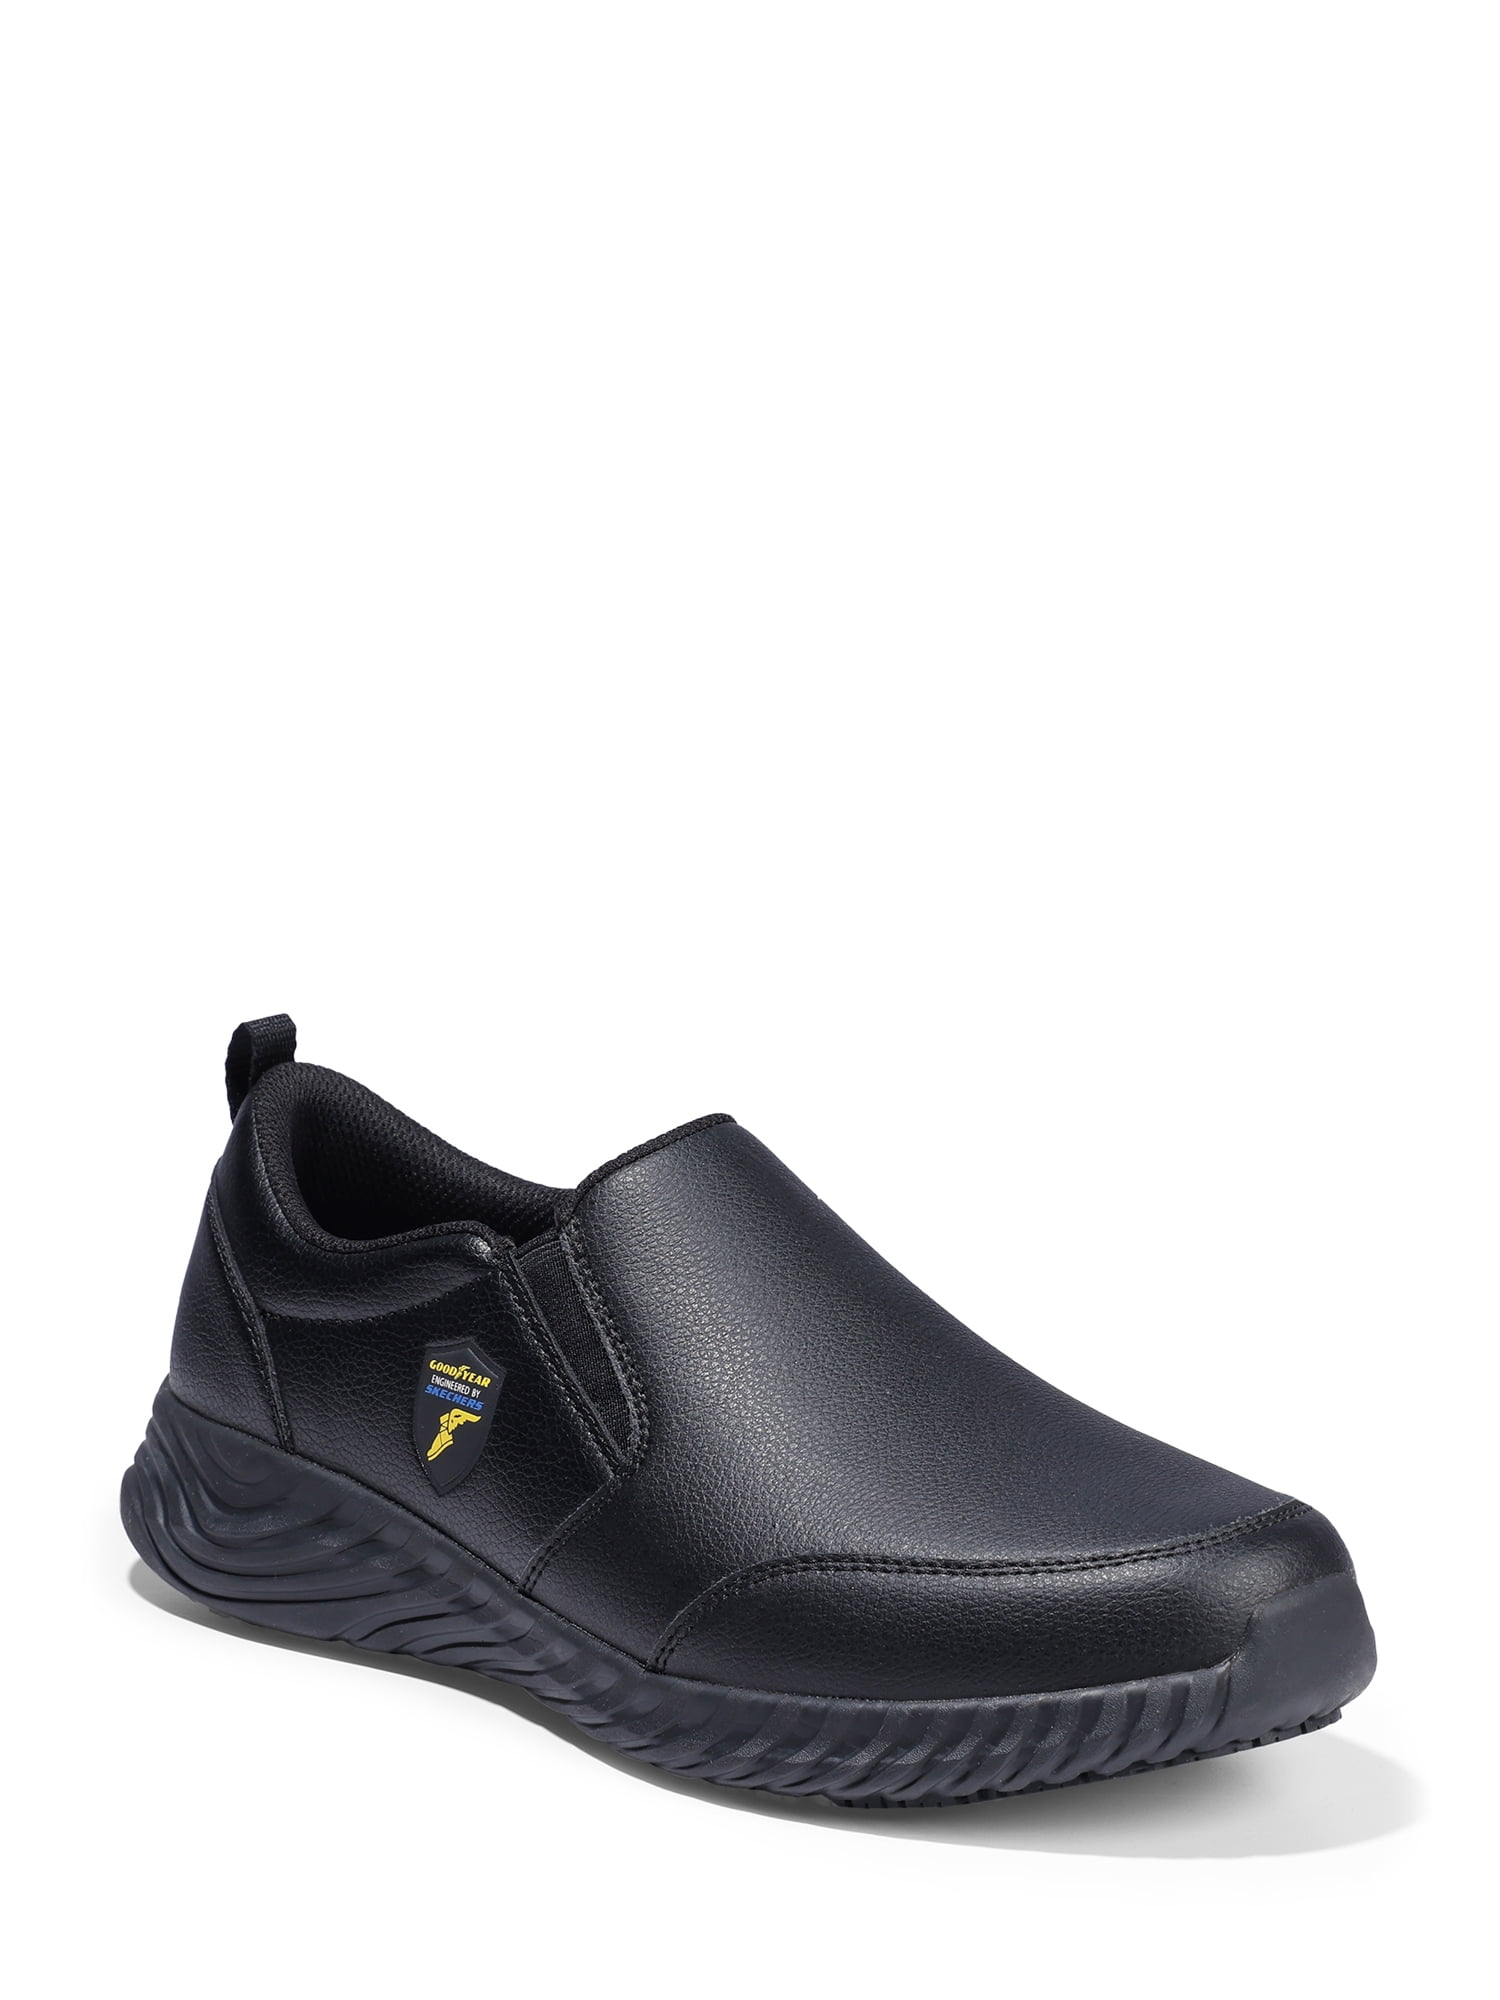 Goodyear Engineered by Skechers Men's Slayter Resistant Shoes - Walmart.com